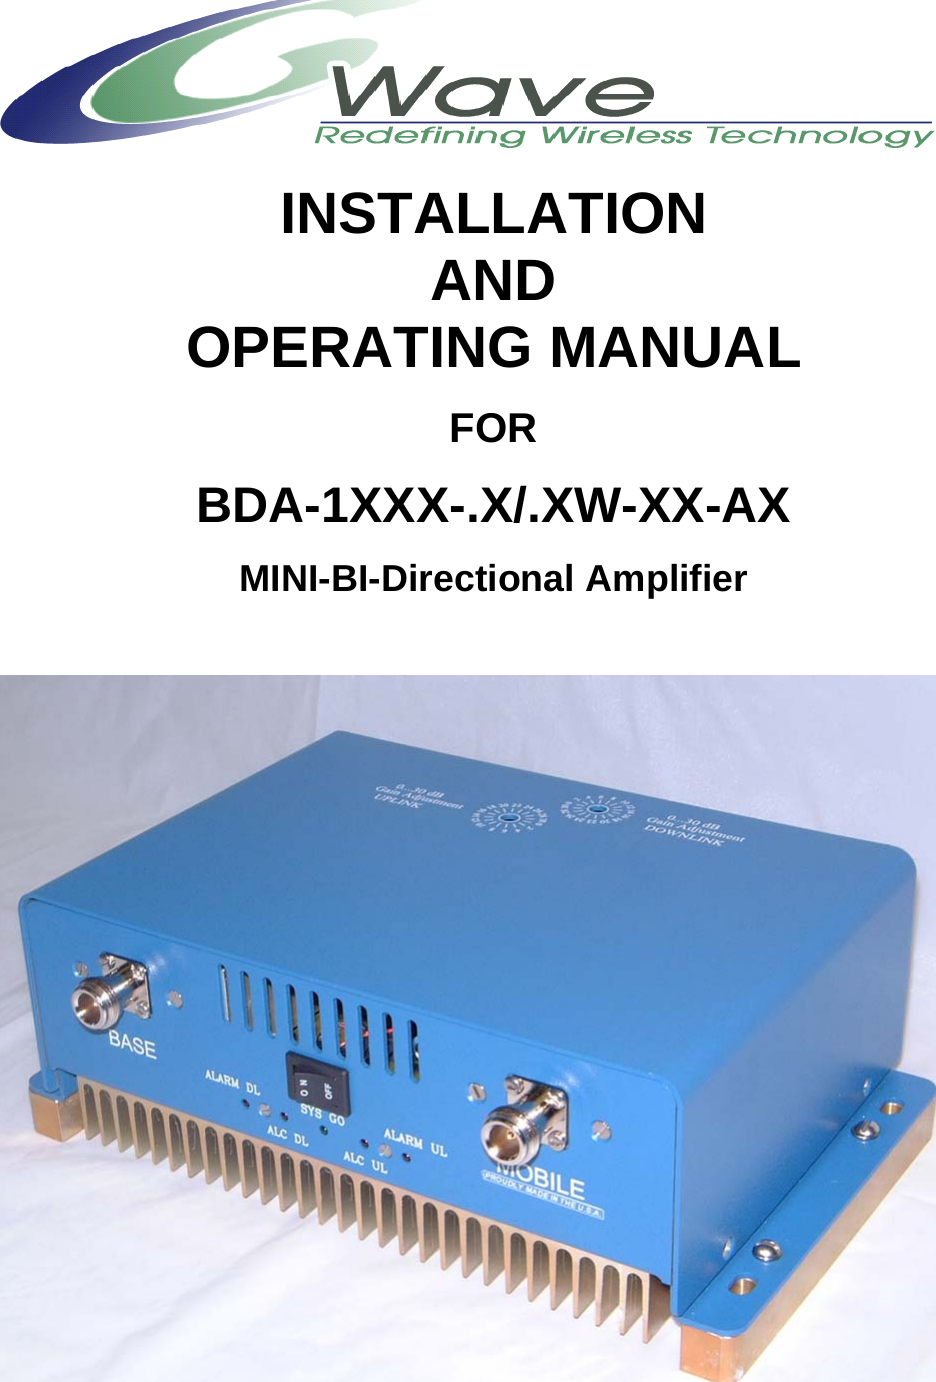   INSTALLATION AND OPERATING MANUAL  FOR  BDA-1XXX-.X/.XW-XX-AX  MINI-BI-Directional Amplifier   